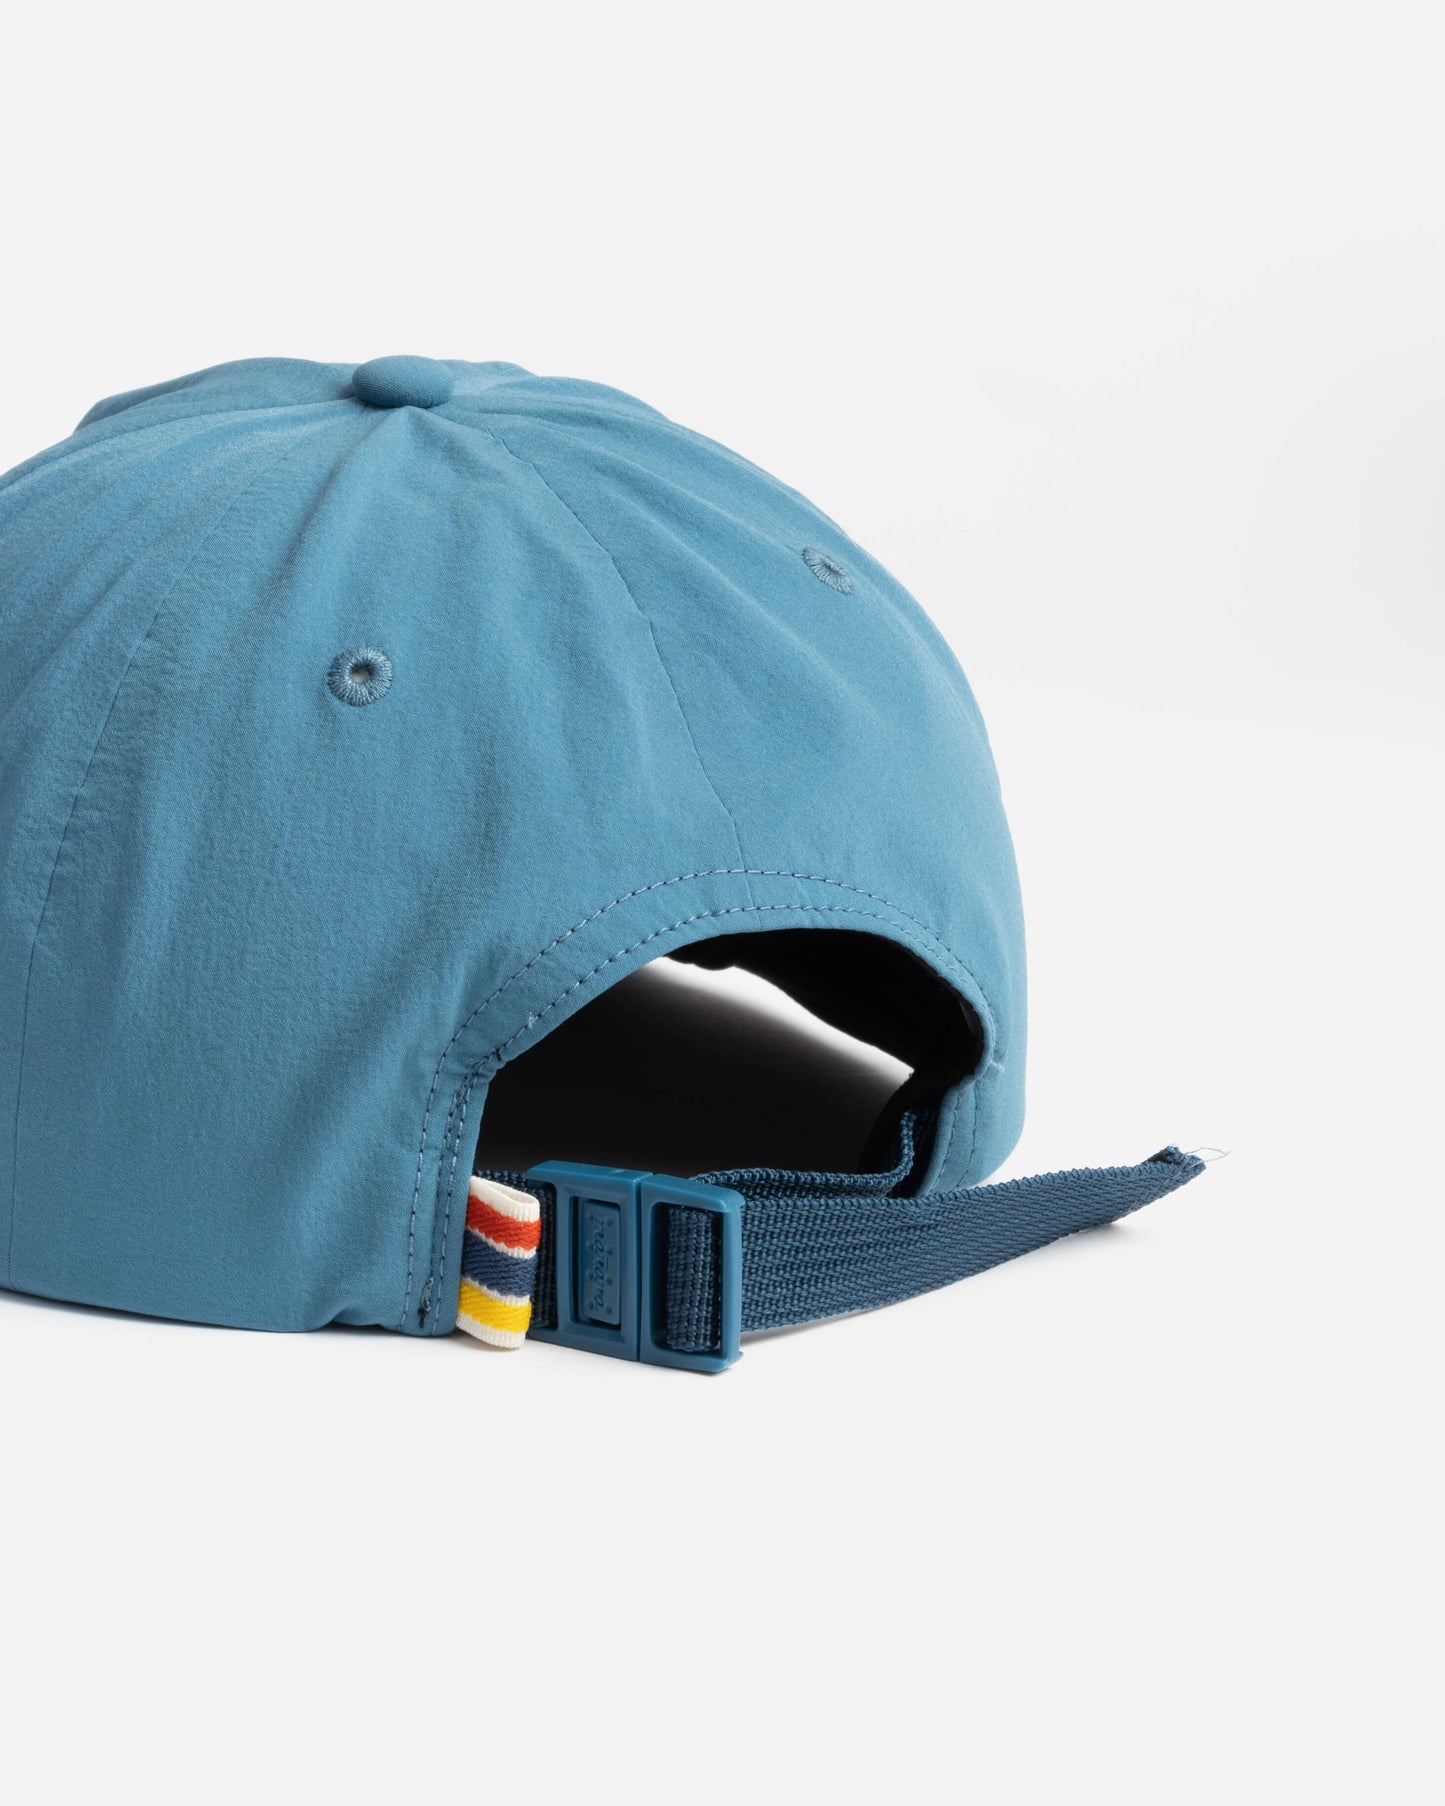 Lake Blue Travel Hat